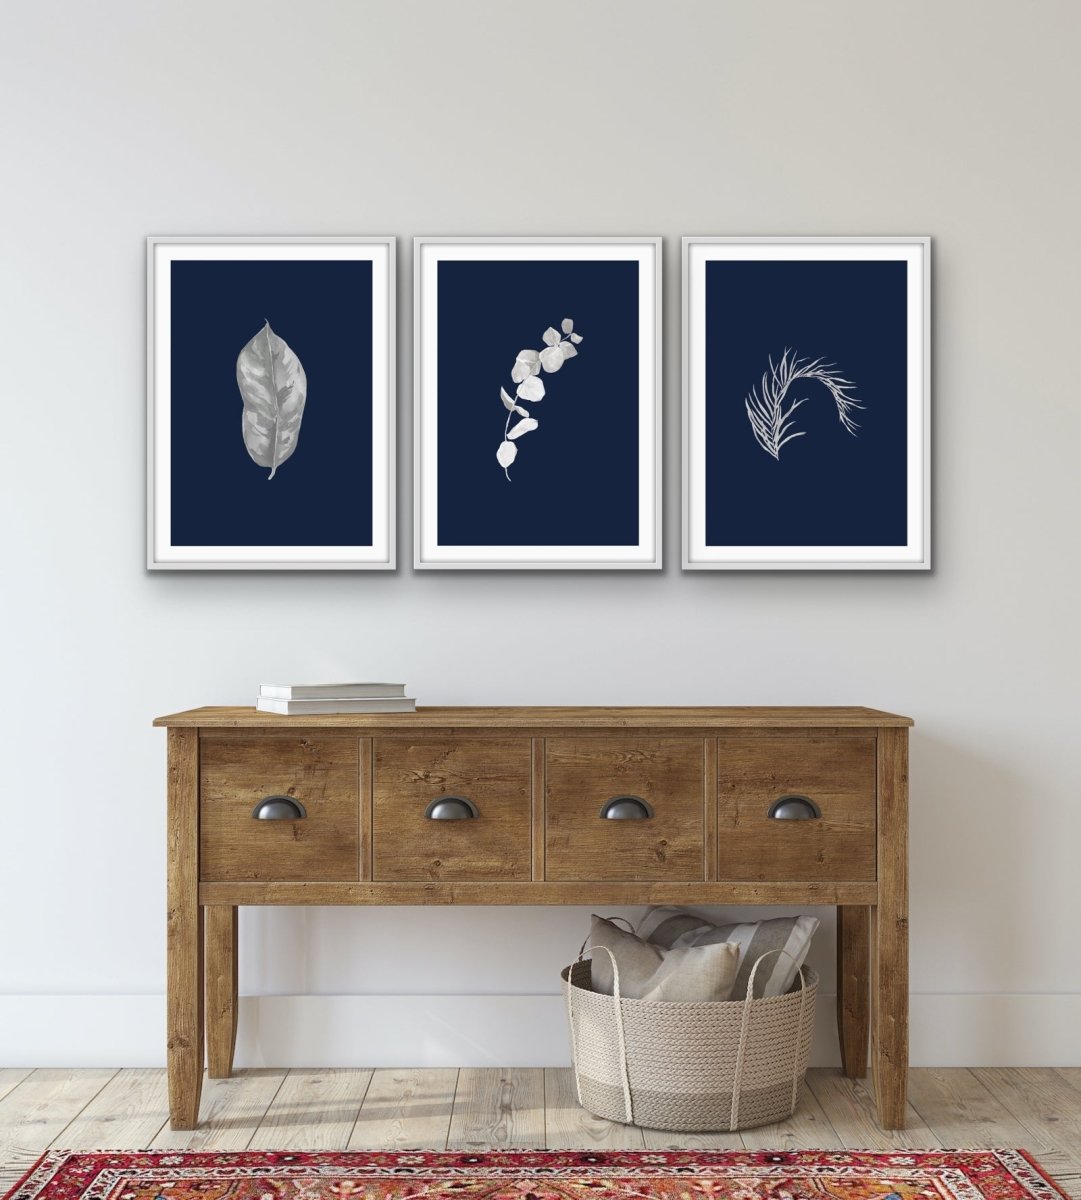 Framed Prints - I Heart Wall Art